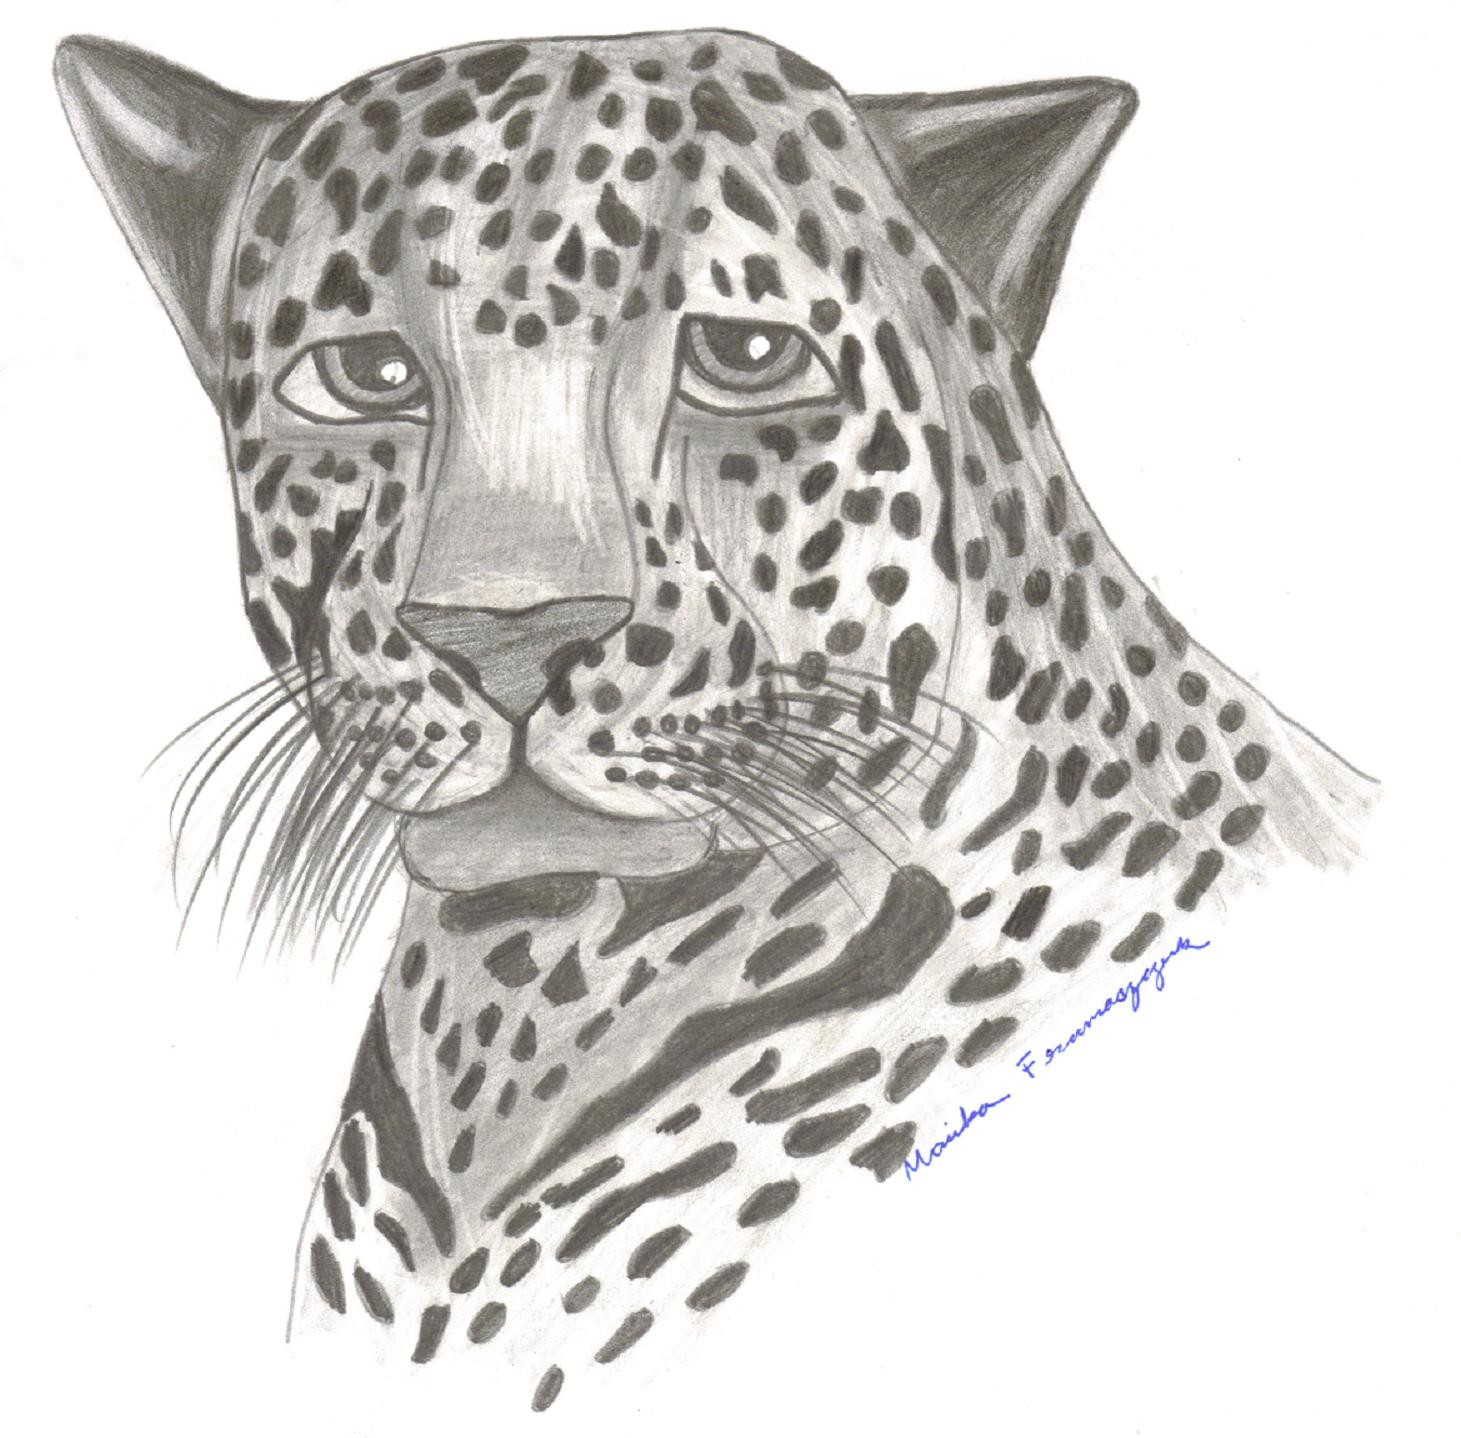 Leopard by Hamstar27